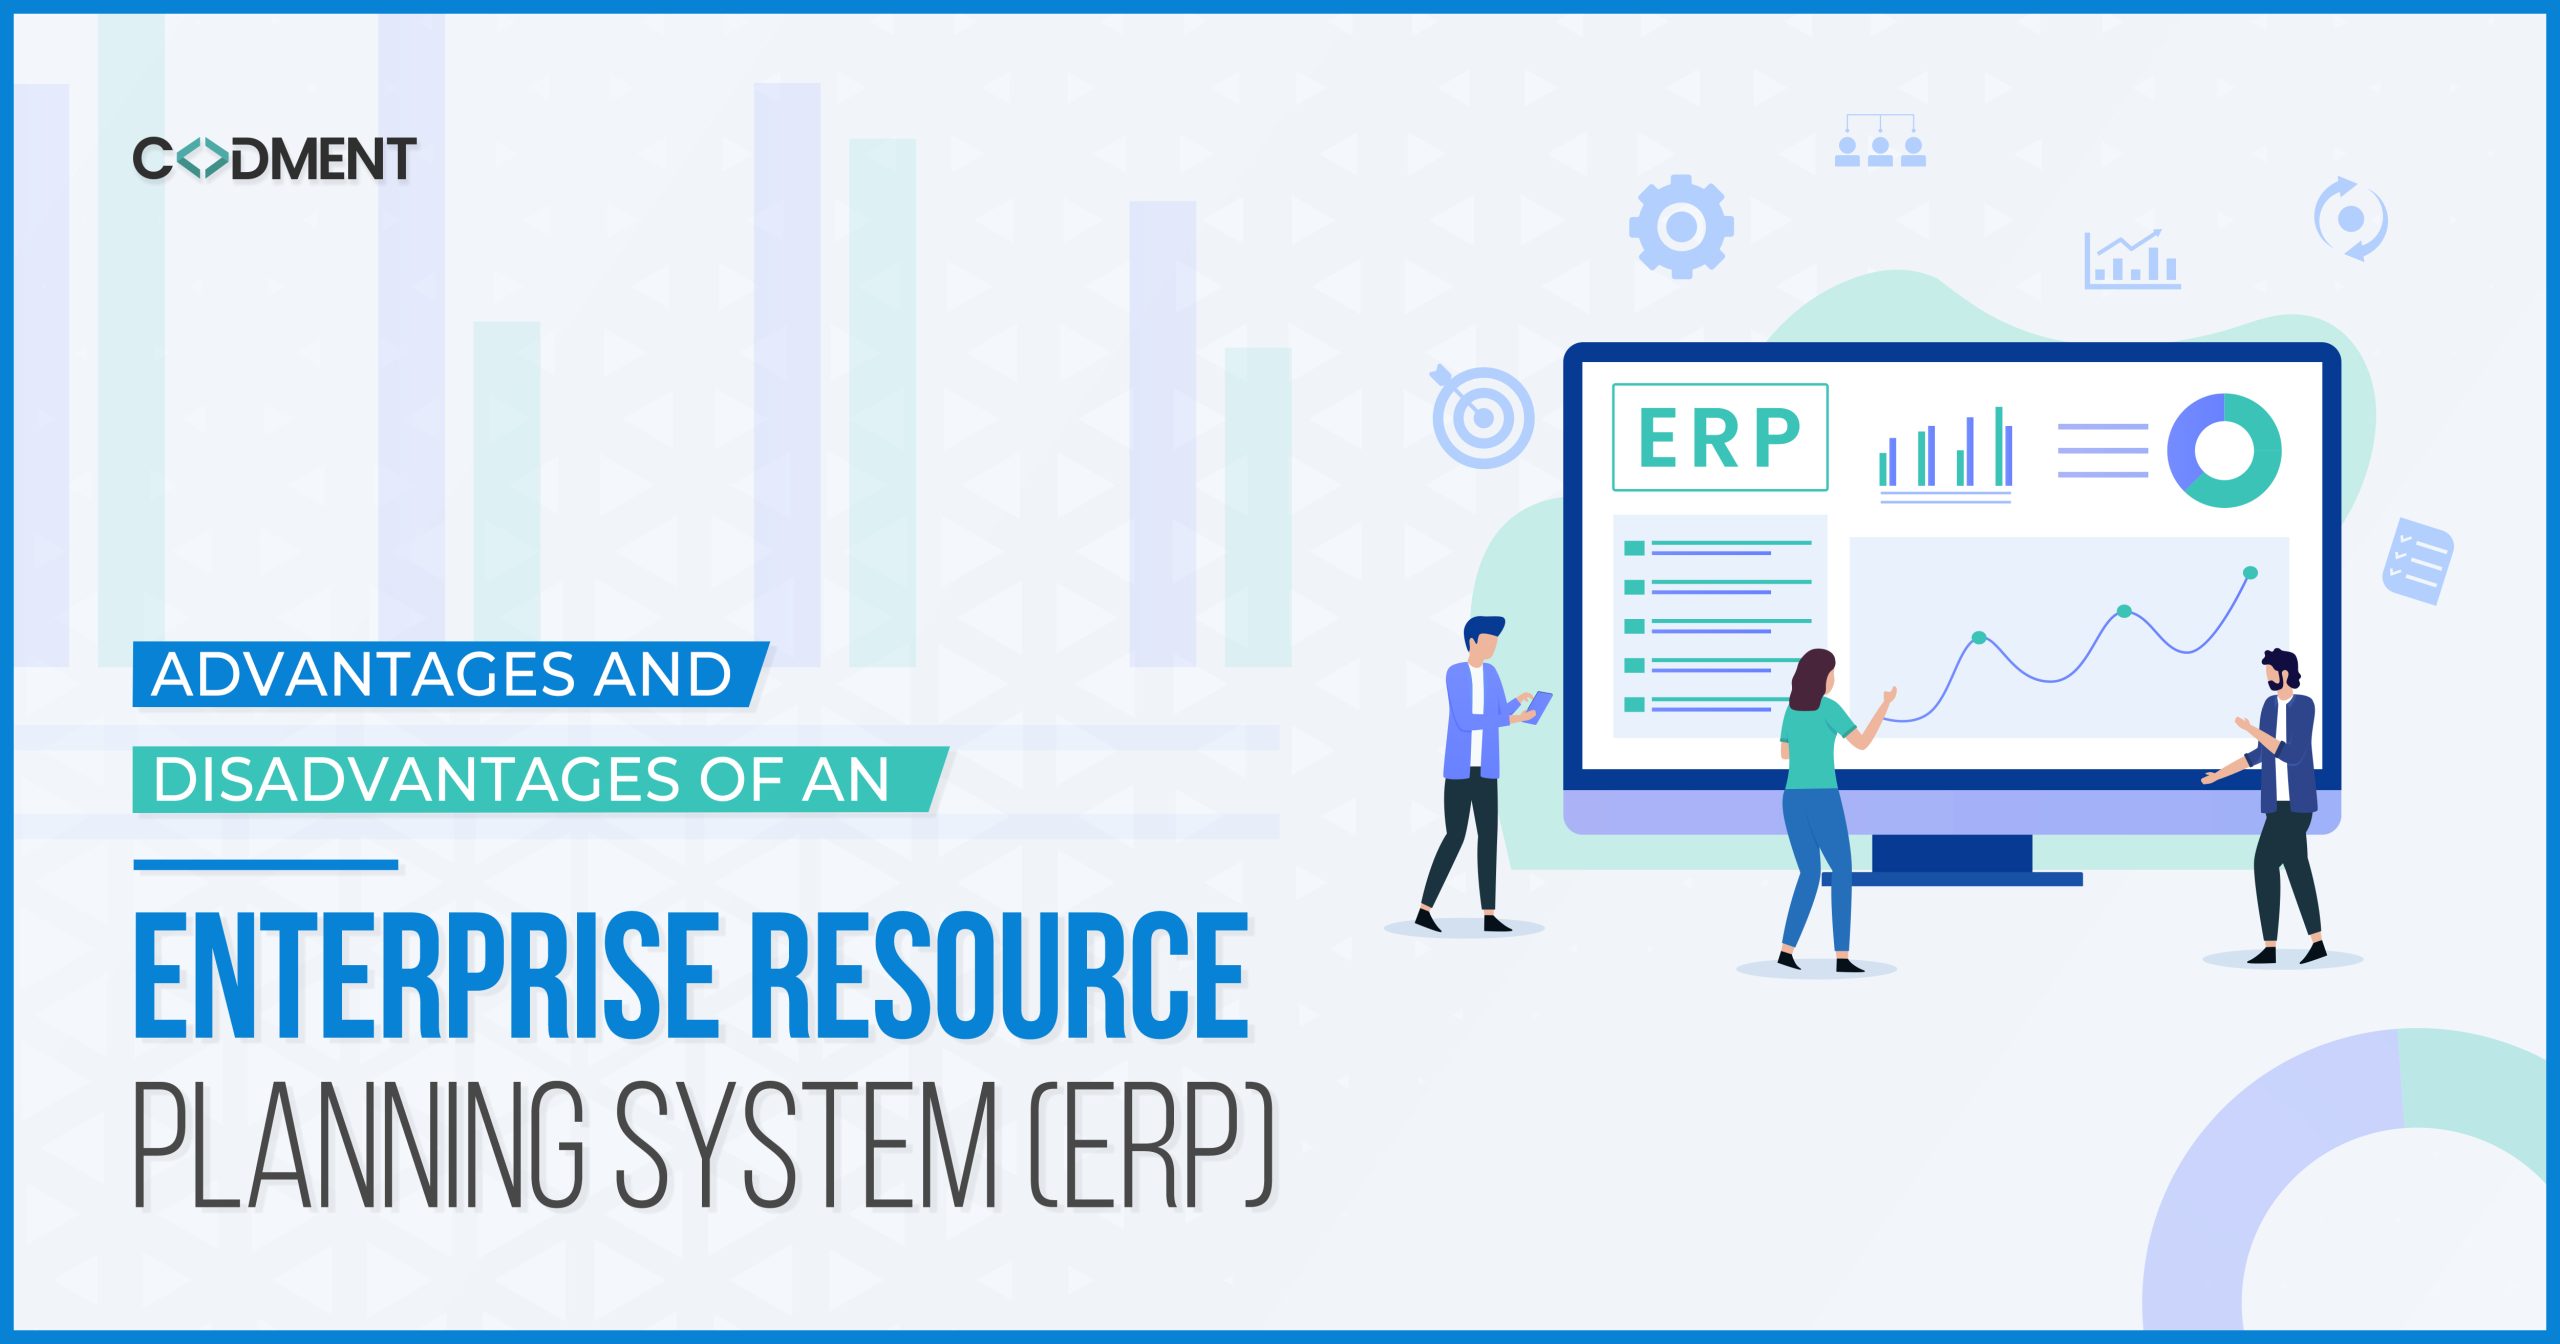 Enterprise Resource Planning system